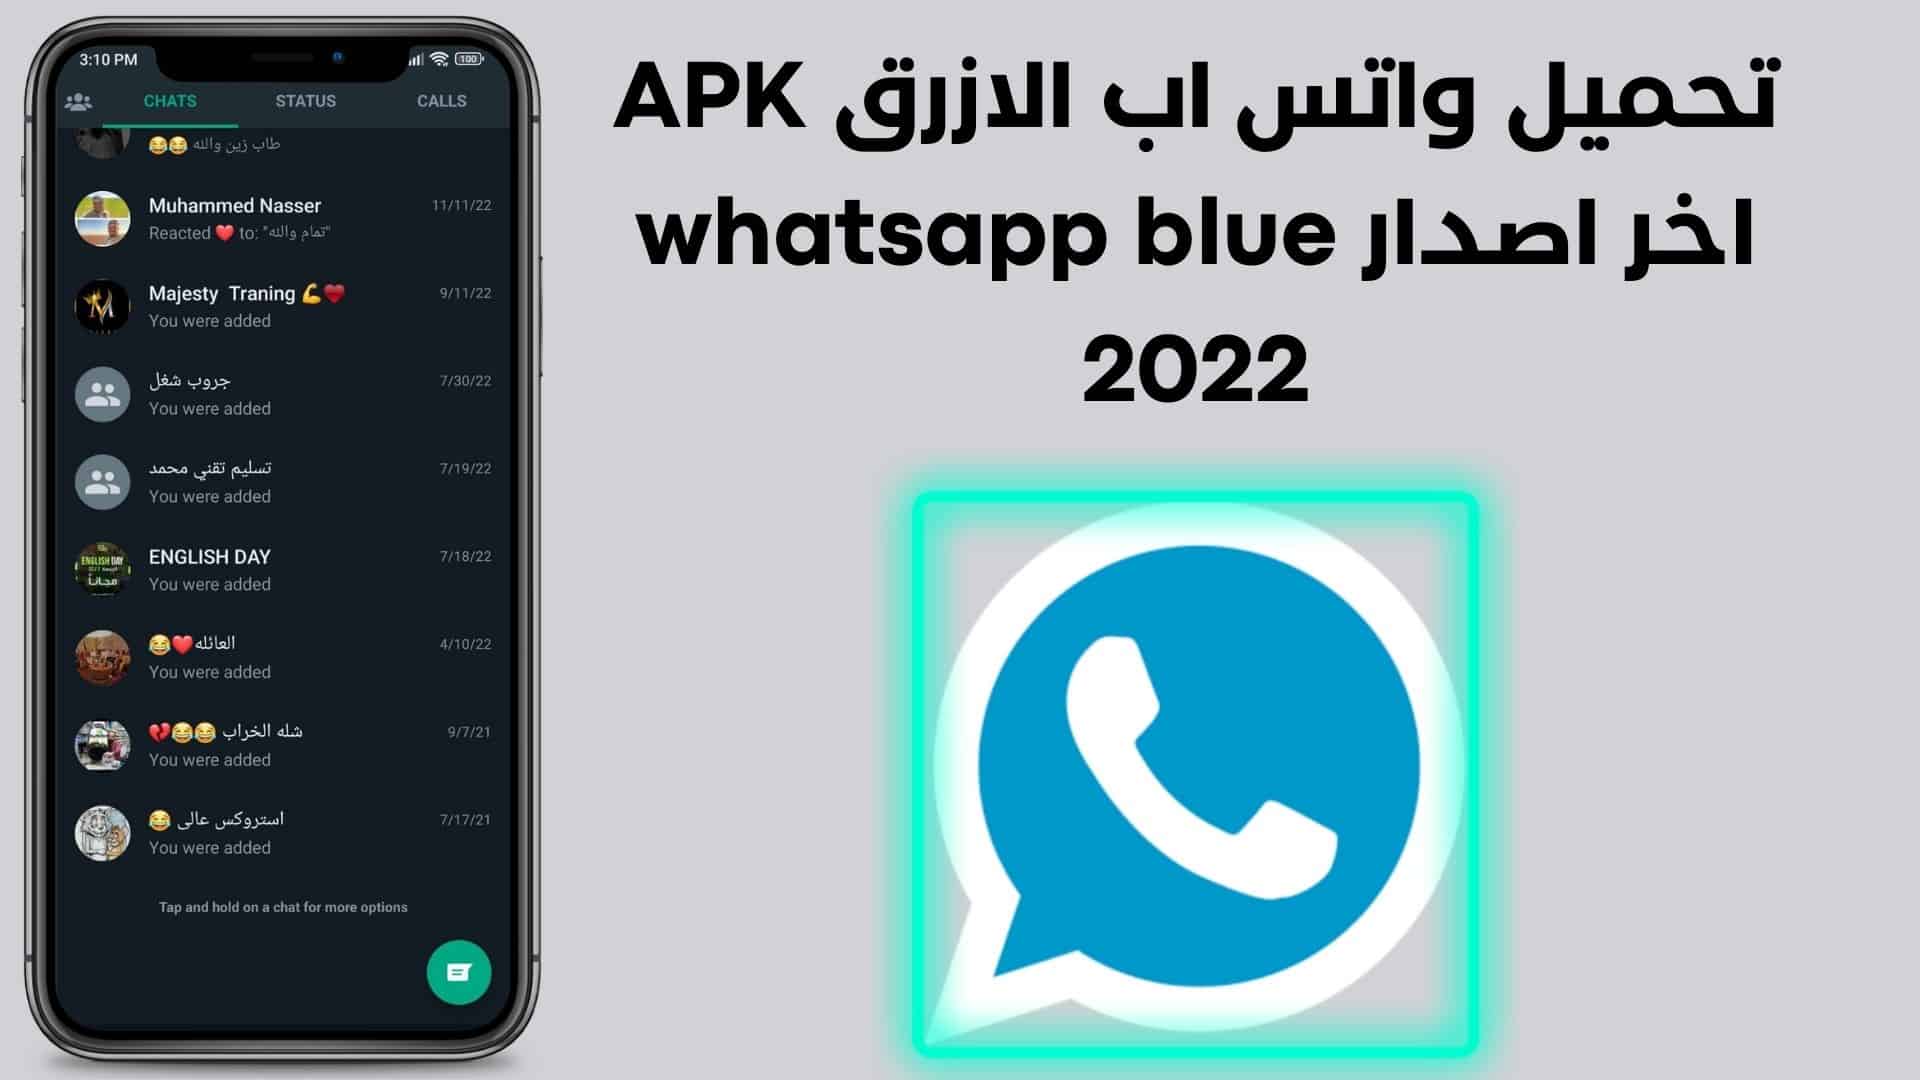 تحميل واتس اب الازرق APK اخر اصدار whatsapp blue 2022